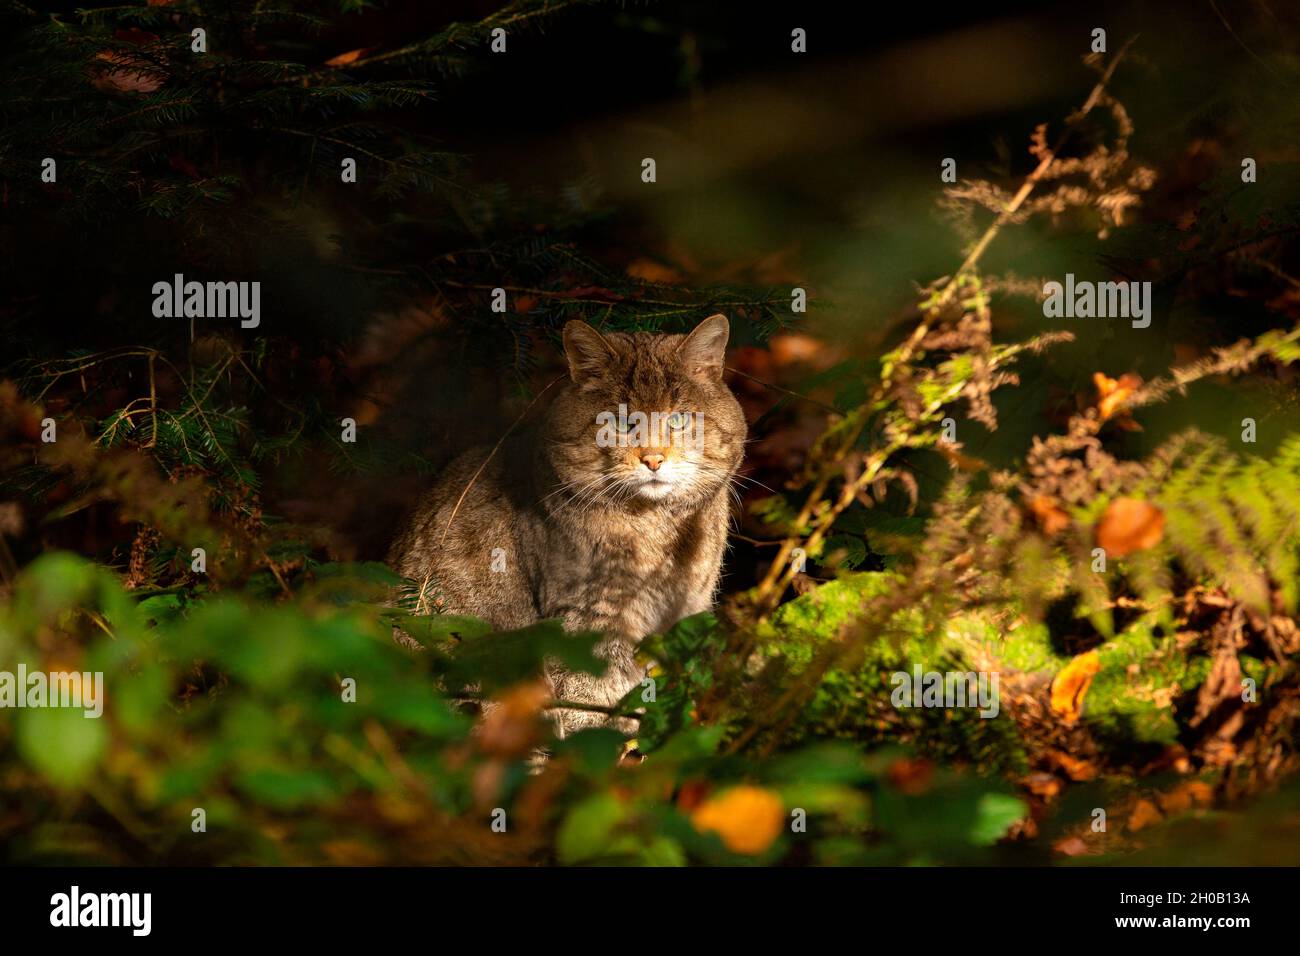 Wild cat (Felis silvestris) in a forest, Bayerisher Wald, Bavaria, Germany Stock Photo